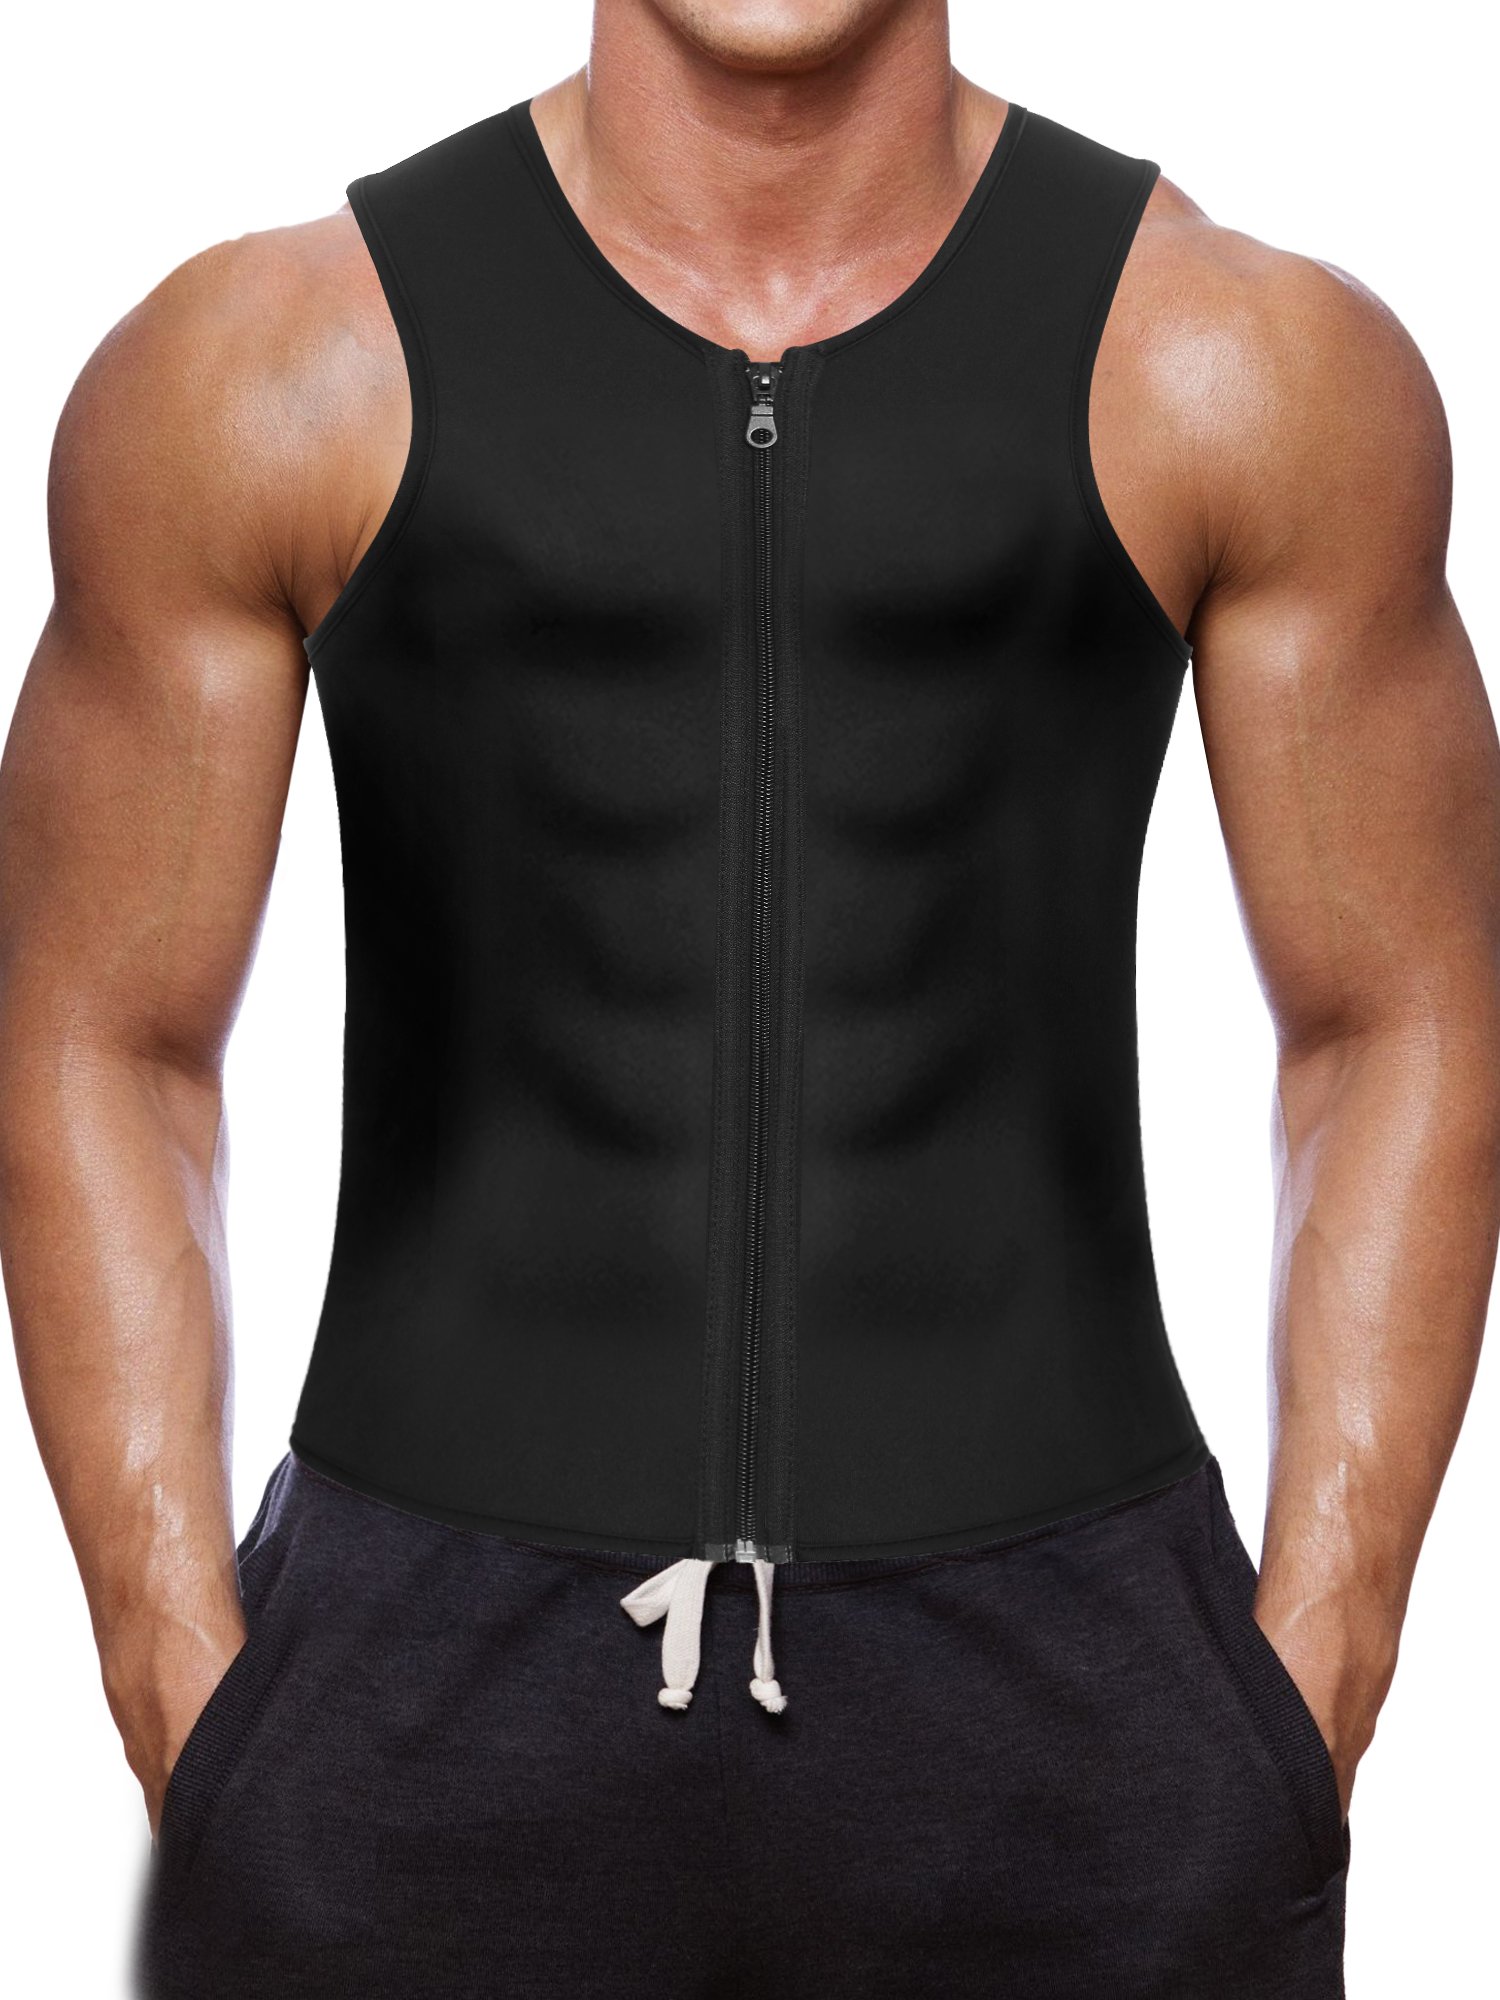 Wonderience Men Waist Trainer Vest Hot Neoprene Sauna Suit Corset Body  Shaper Zipper Tank Top Workout Shirt X-Large Black